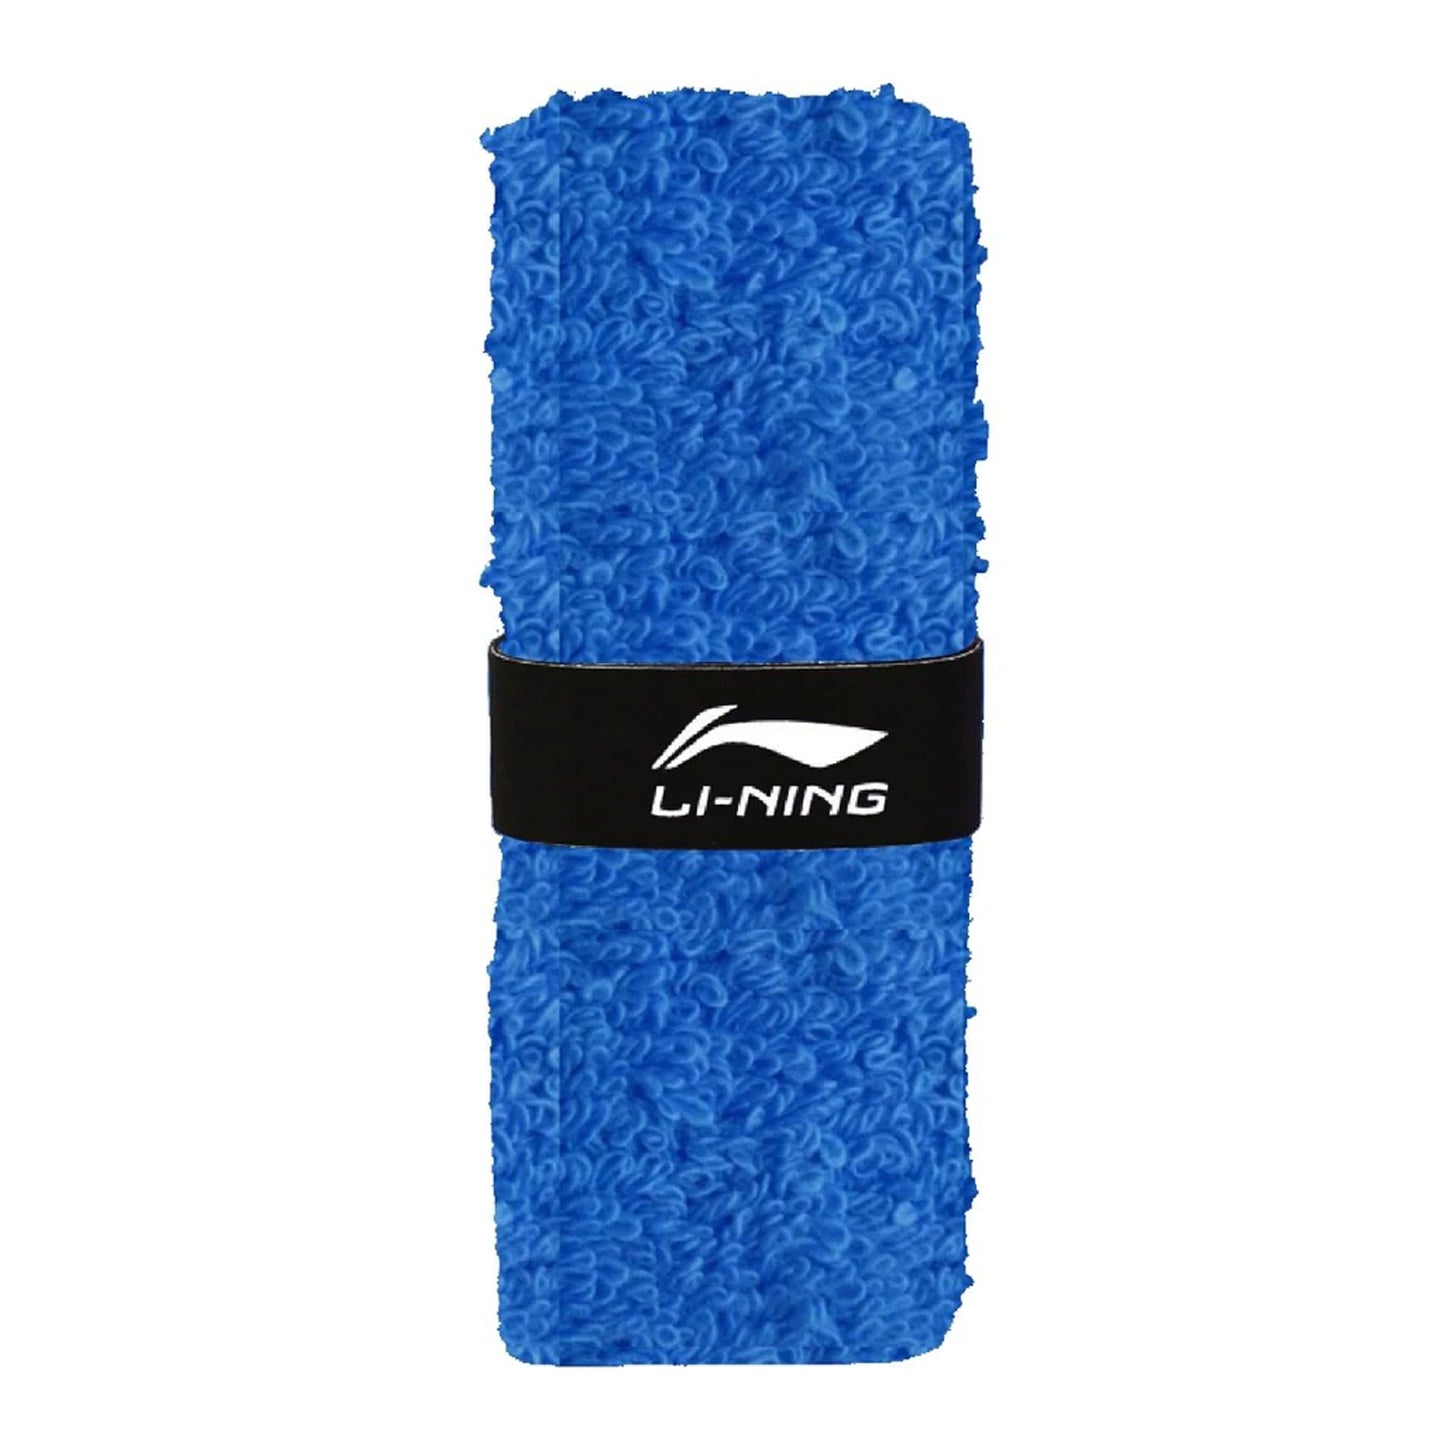 Li-Ning GC001 Towel Grip Badminton Racket Grips, Pack of 3 - Assorted Colors - Best Price online Prokicksports.com